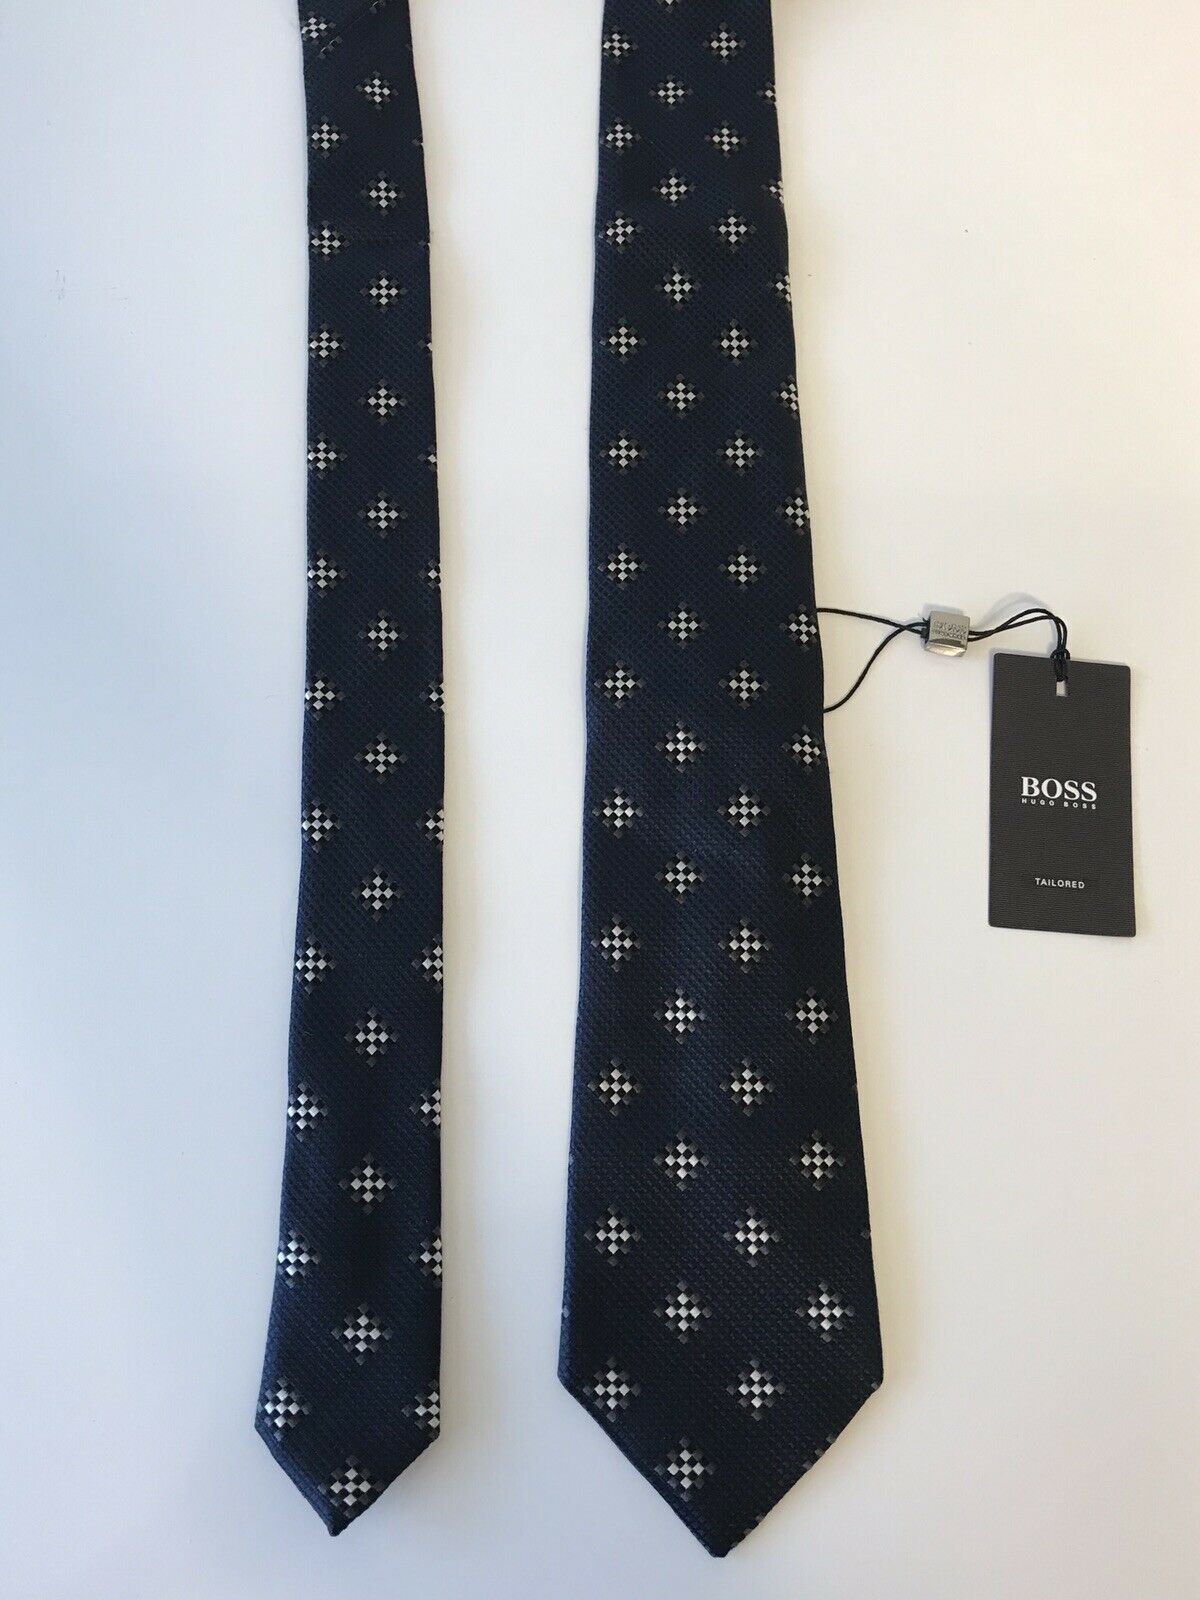 NWT $135 Hugo Boss Tailored Neck Tie 100% Silk Dark Blue Handmade in Italy